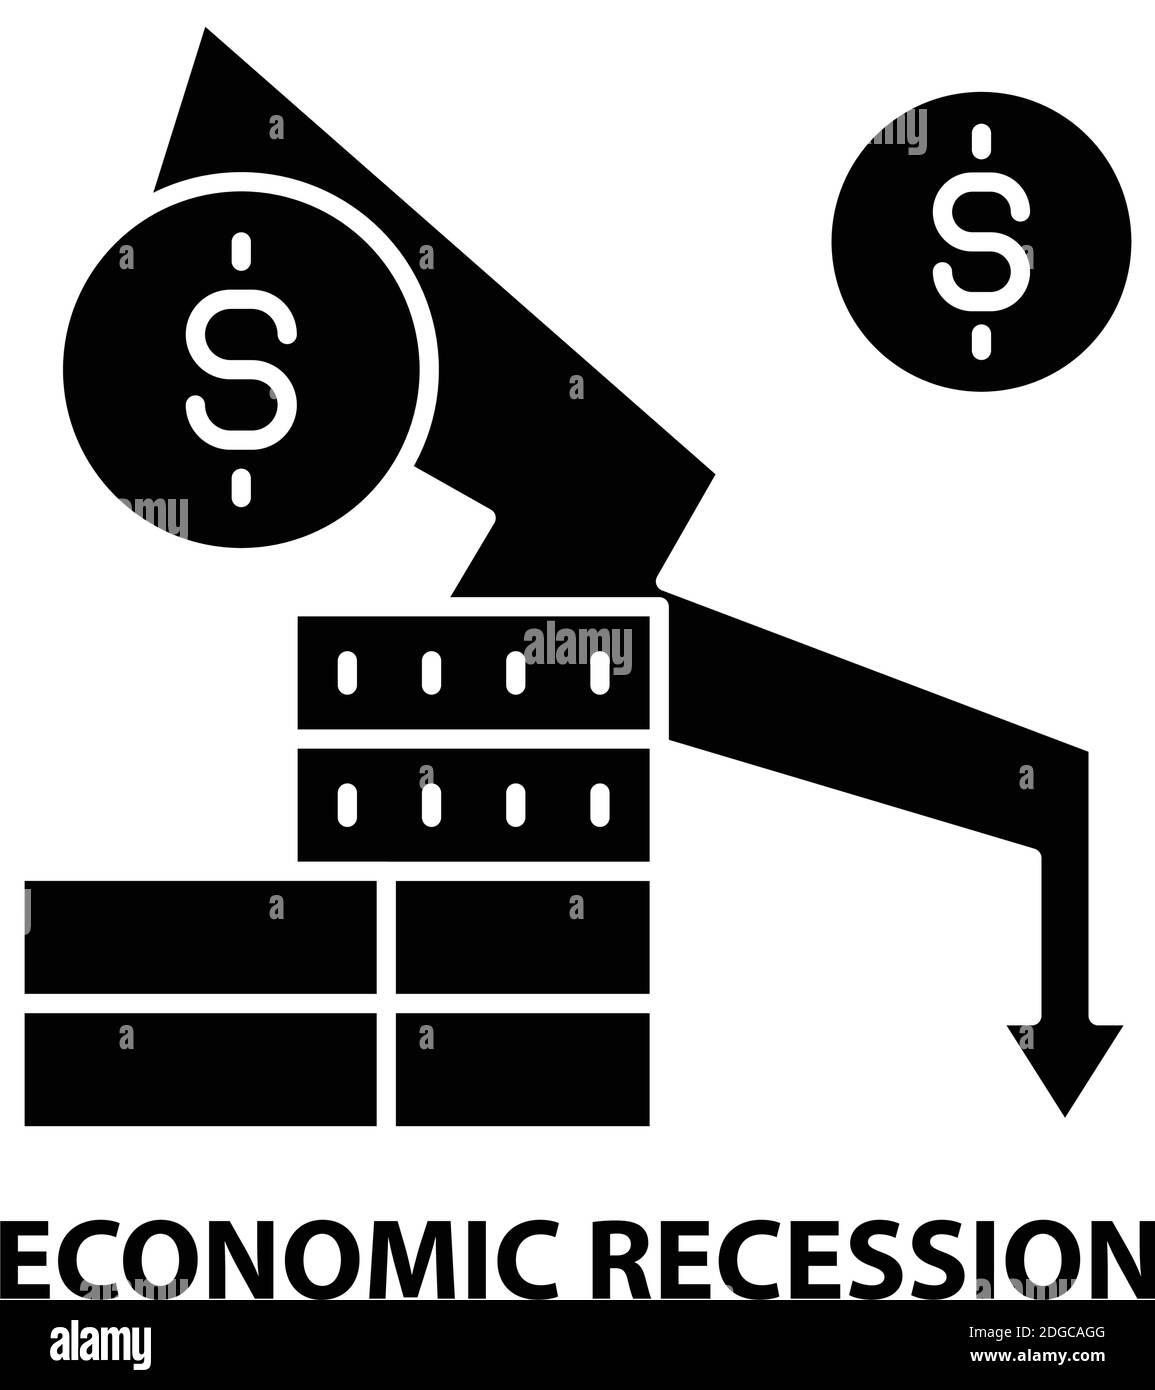 economic recession icon, black vector sign with editable strokes, concept illustration Stock Vector